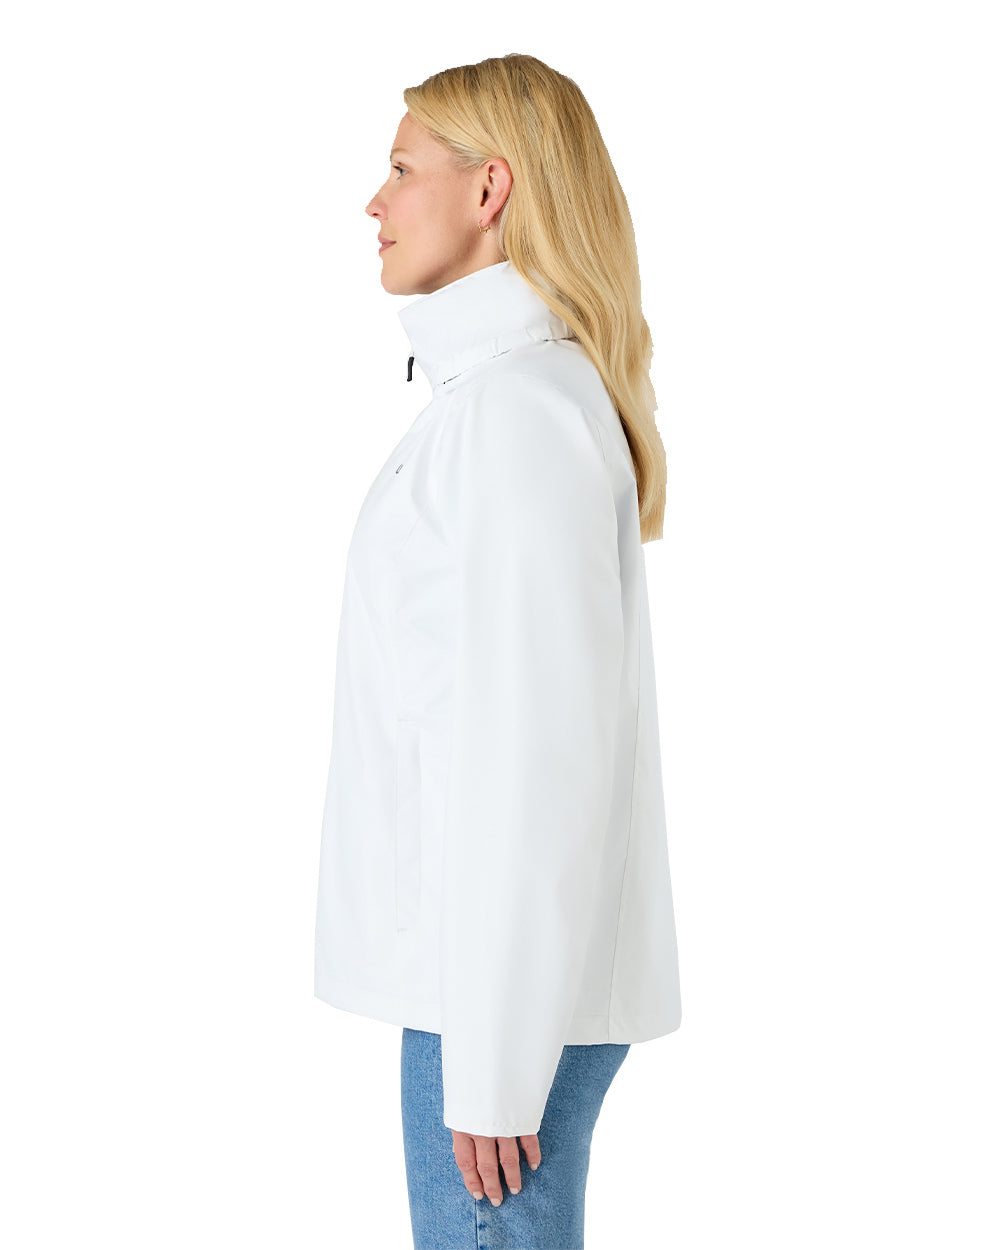 White Coloured Musto Womens Nautic Rain Jacket On A White Background 